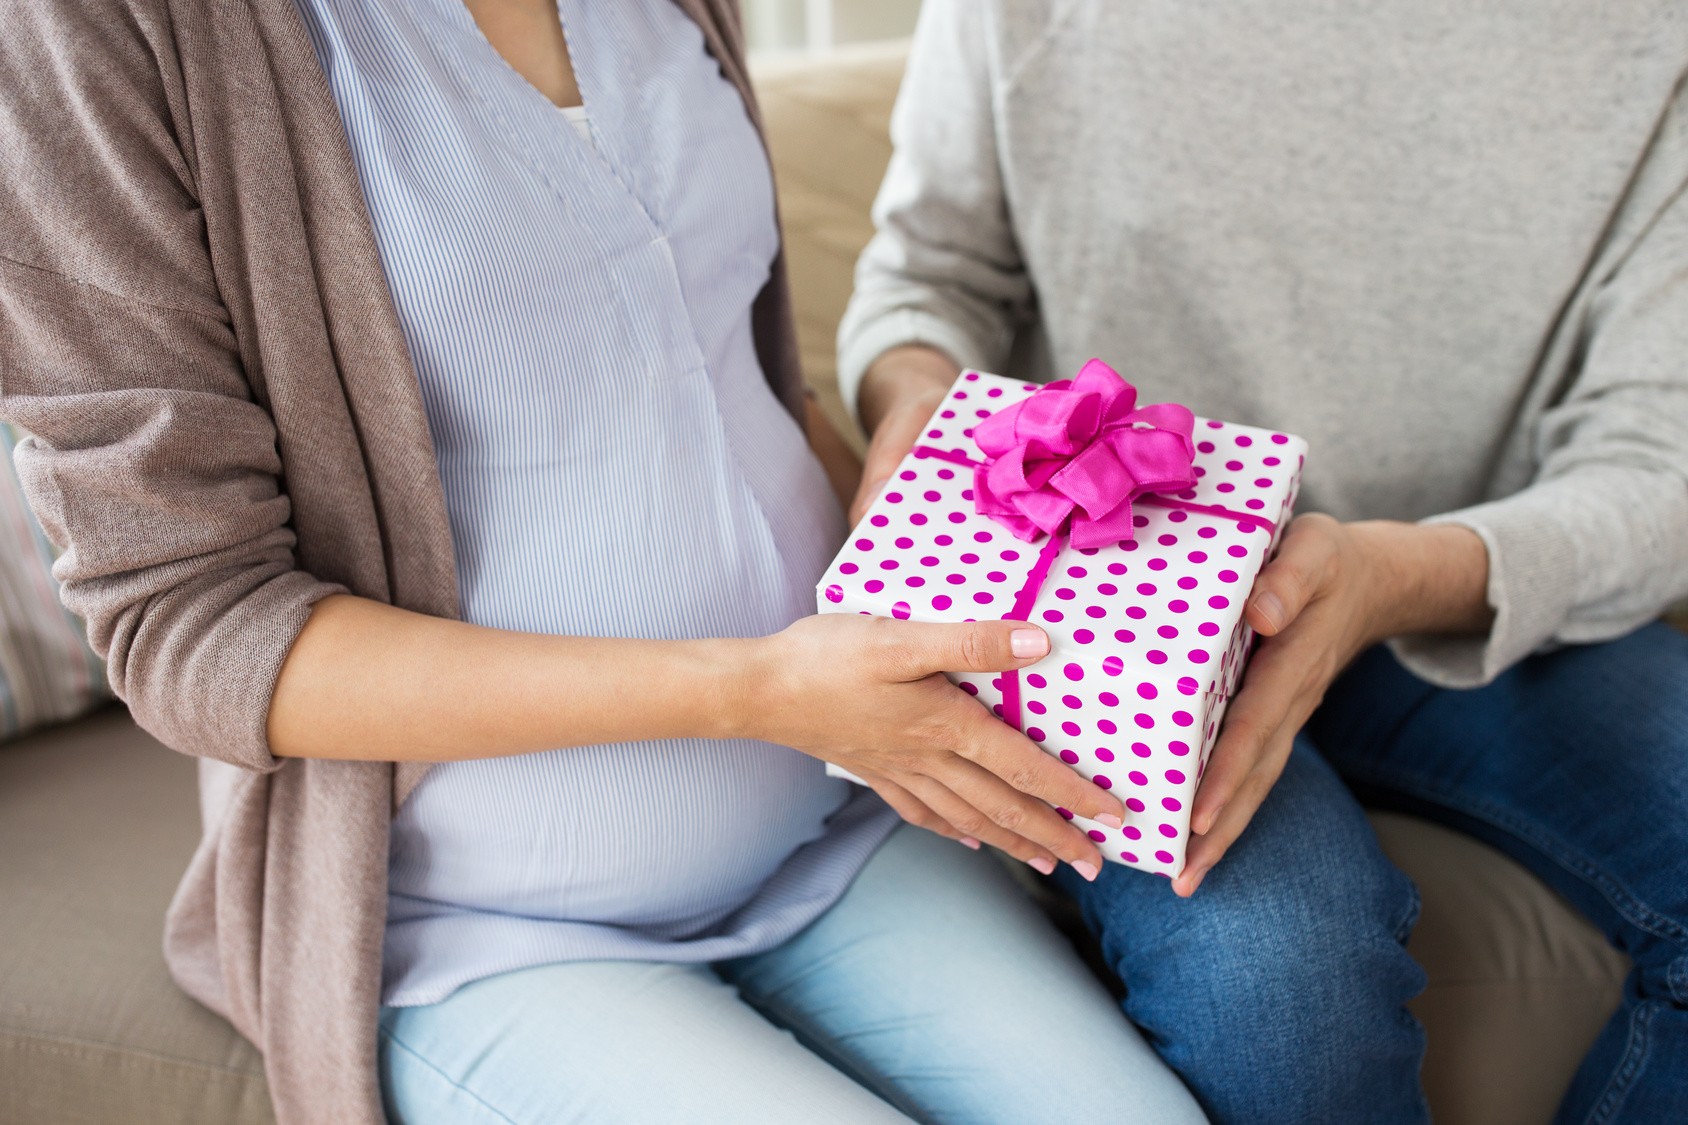 apodo Mentor heroico Regalos para embarazadas ¡Top 10 regalos para futuras mamás!